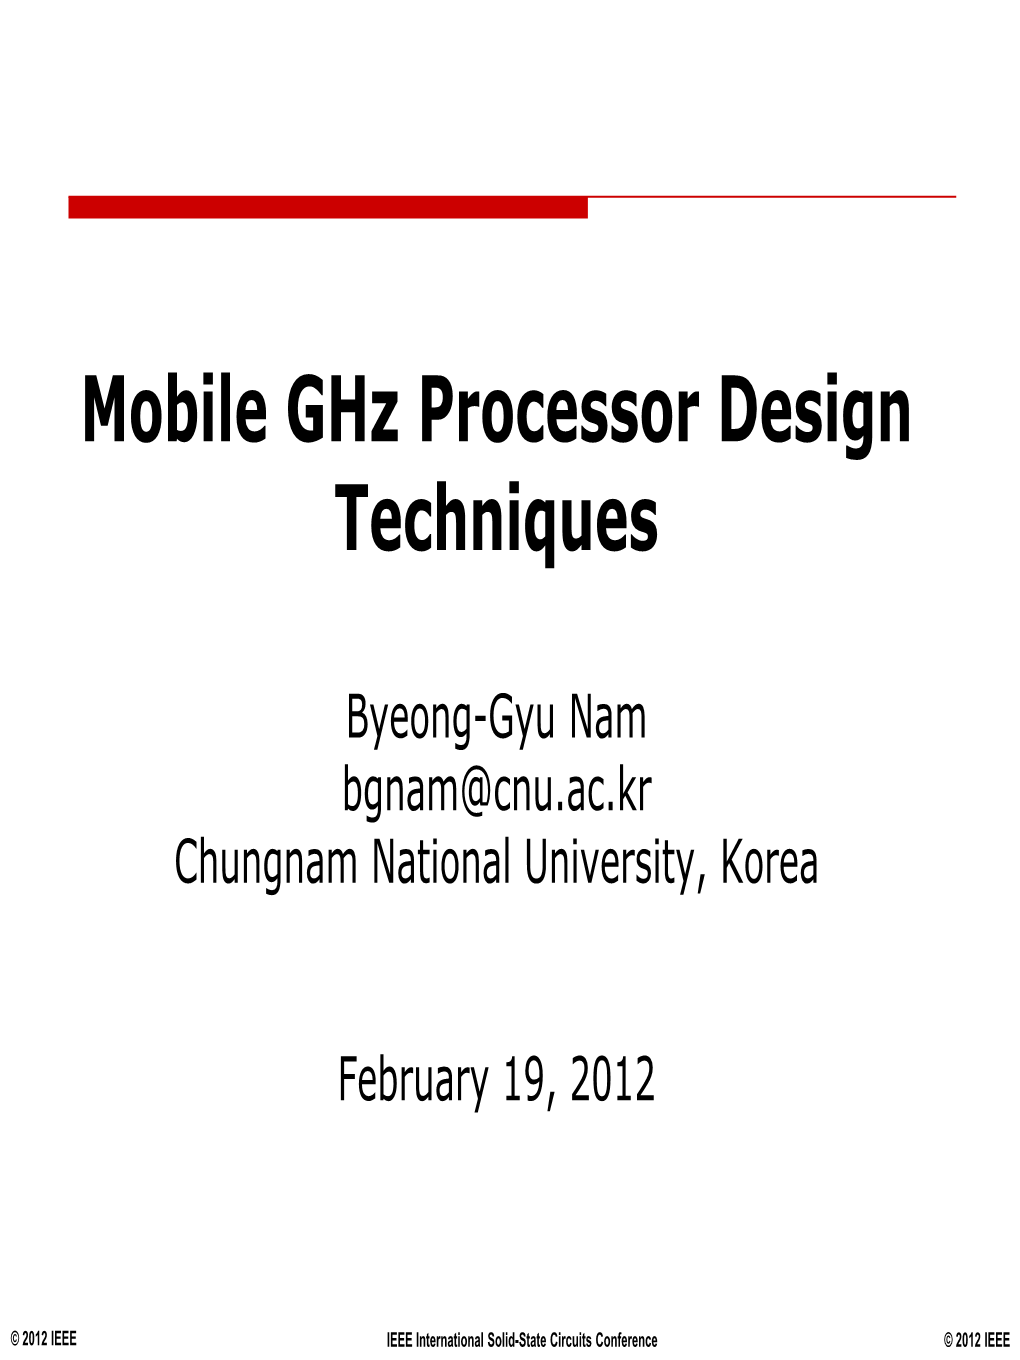 Mobile Ghz Processor Design Techniques